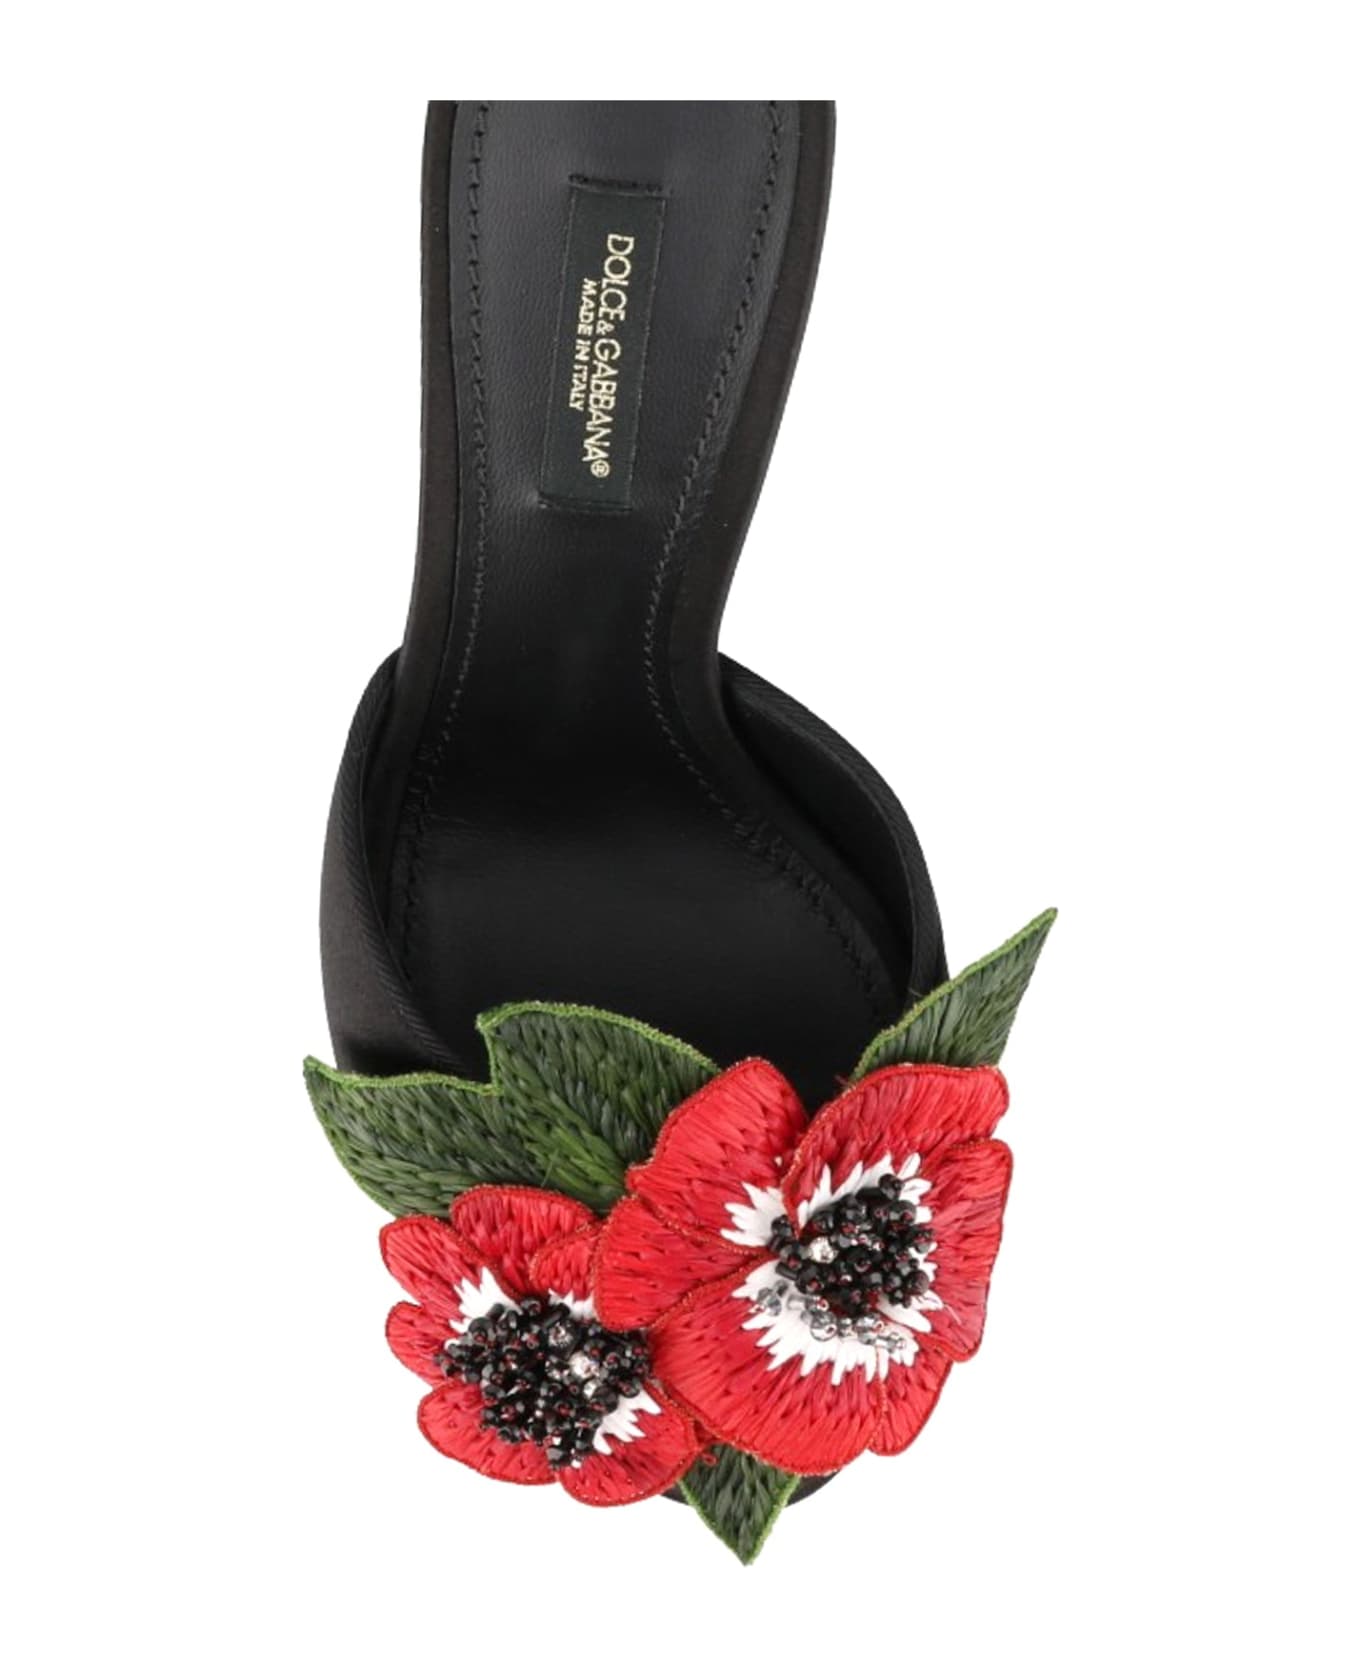 Dolce & Gabbana Keira Mule Sandals - Black